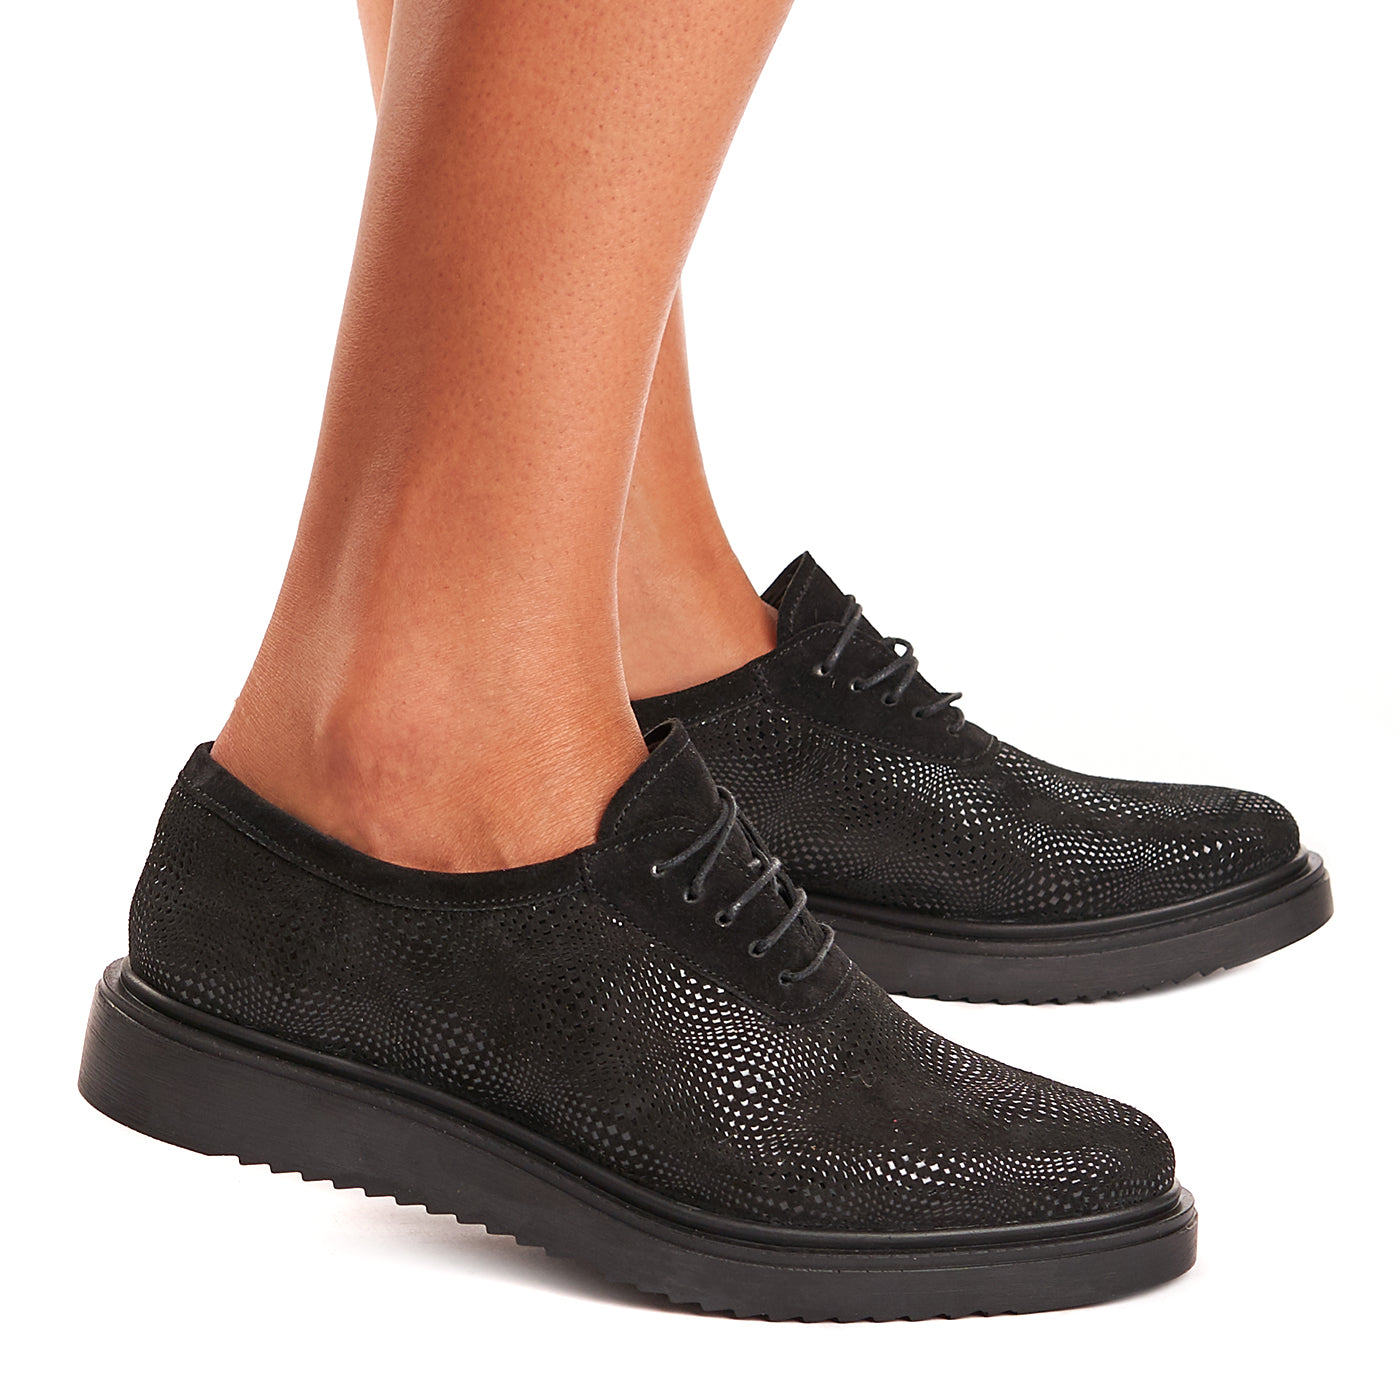 Pantofi dama casual din piele naturala neagra 1405